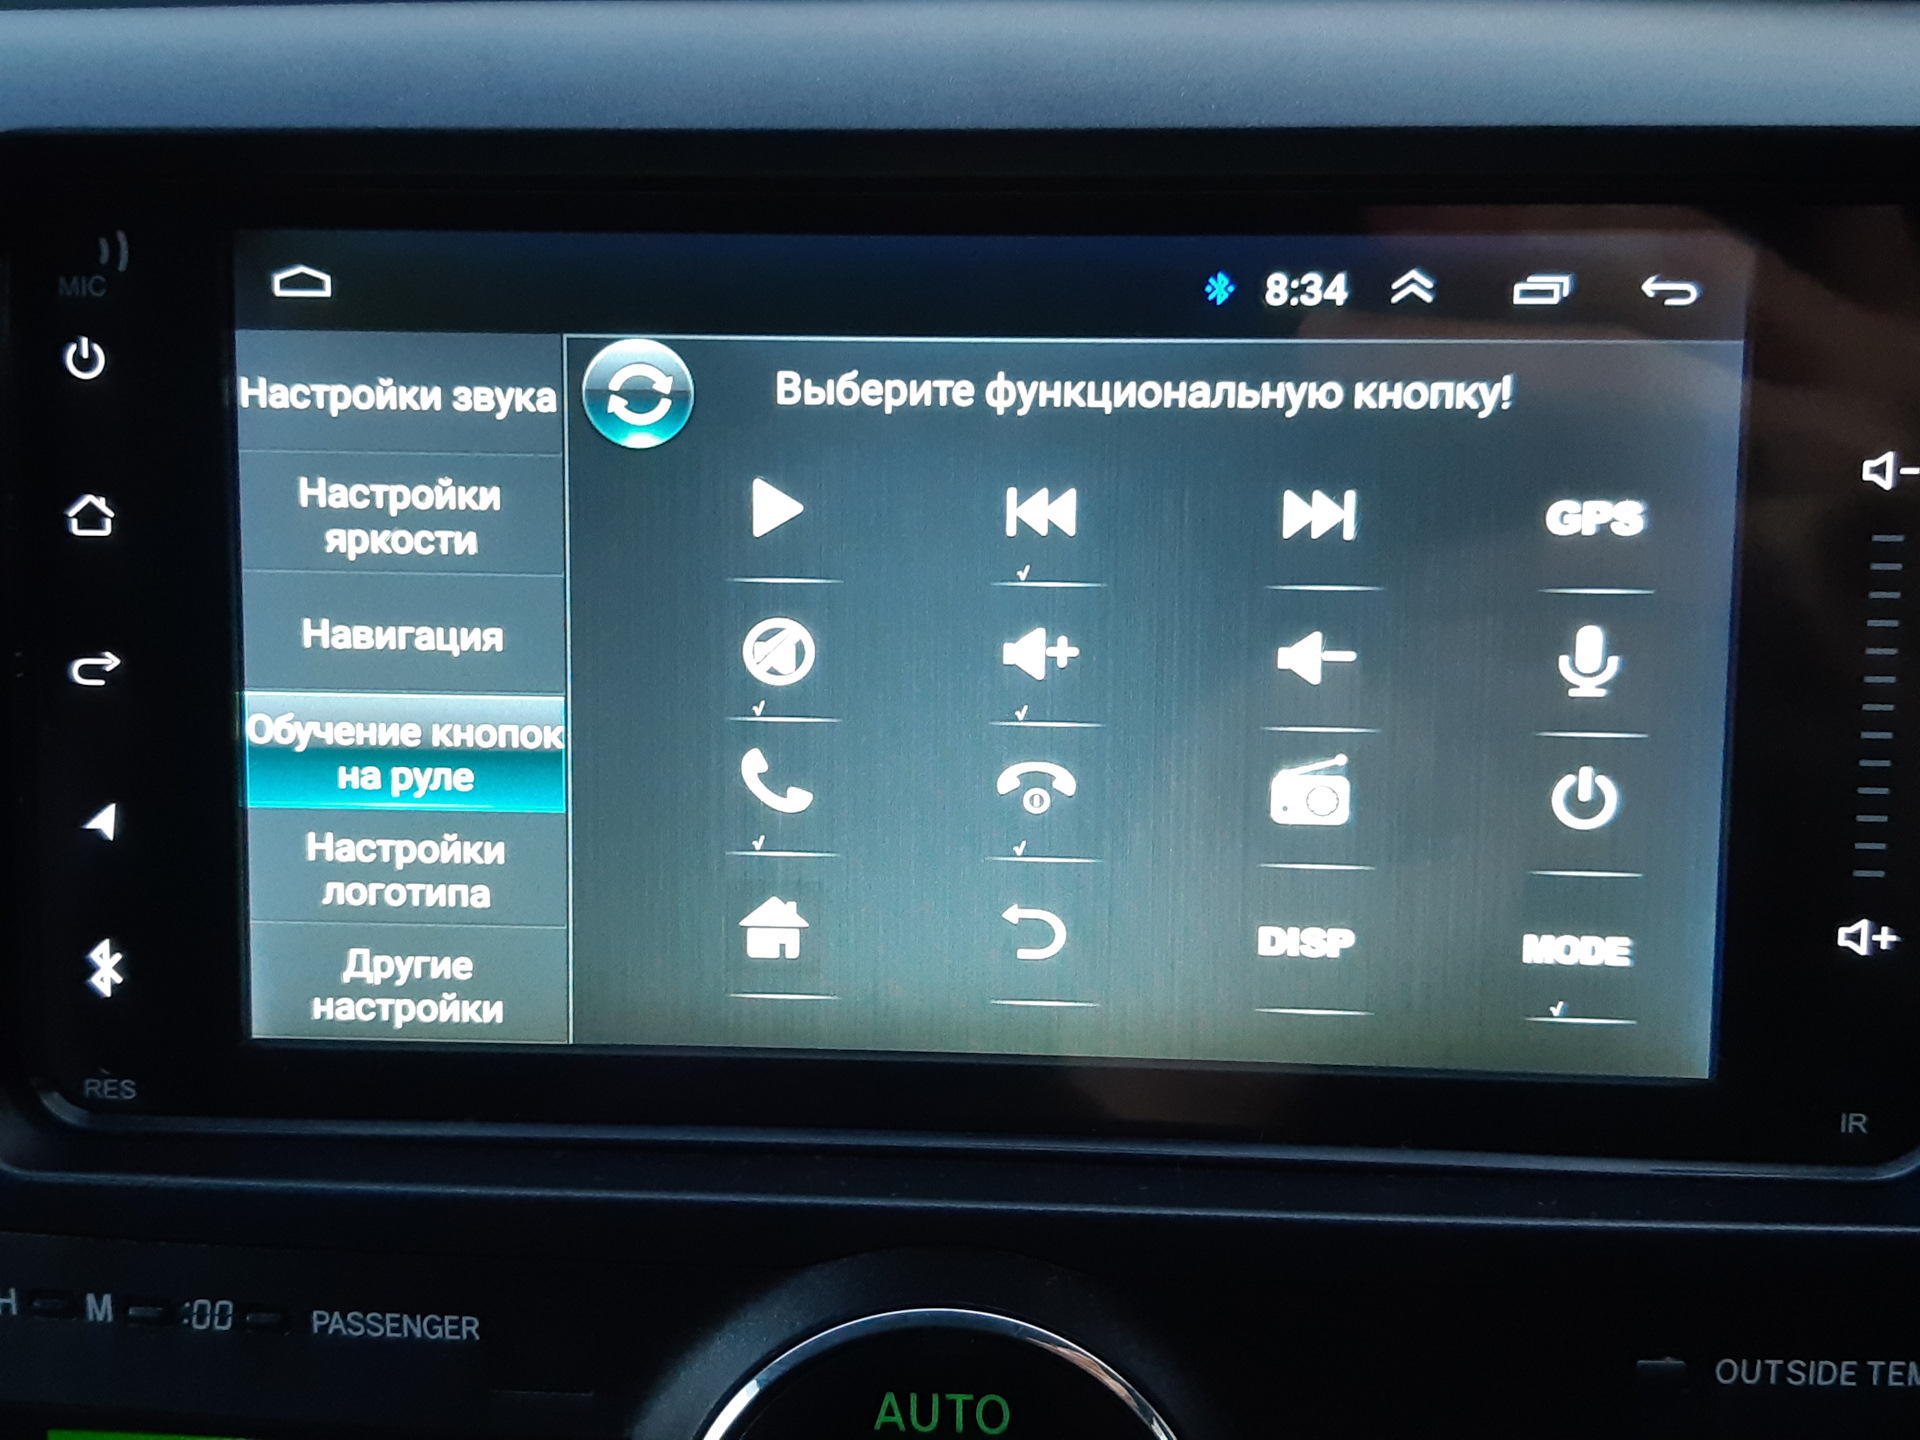 Как установить логотип авто на андроиде. Андроид магнитола на Аллион 260. Магнитола hd7088 андроид усилитель. Android для Toyota Allion 260.